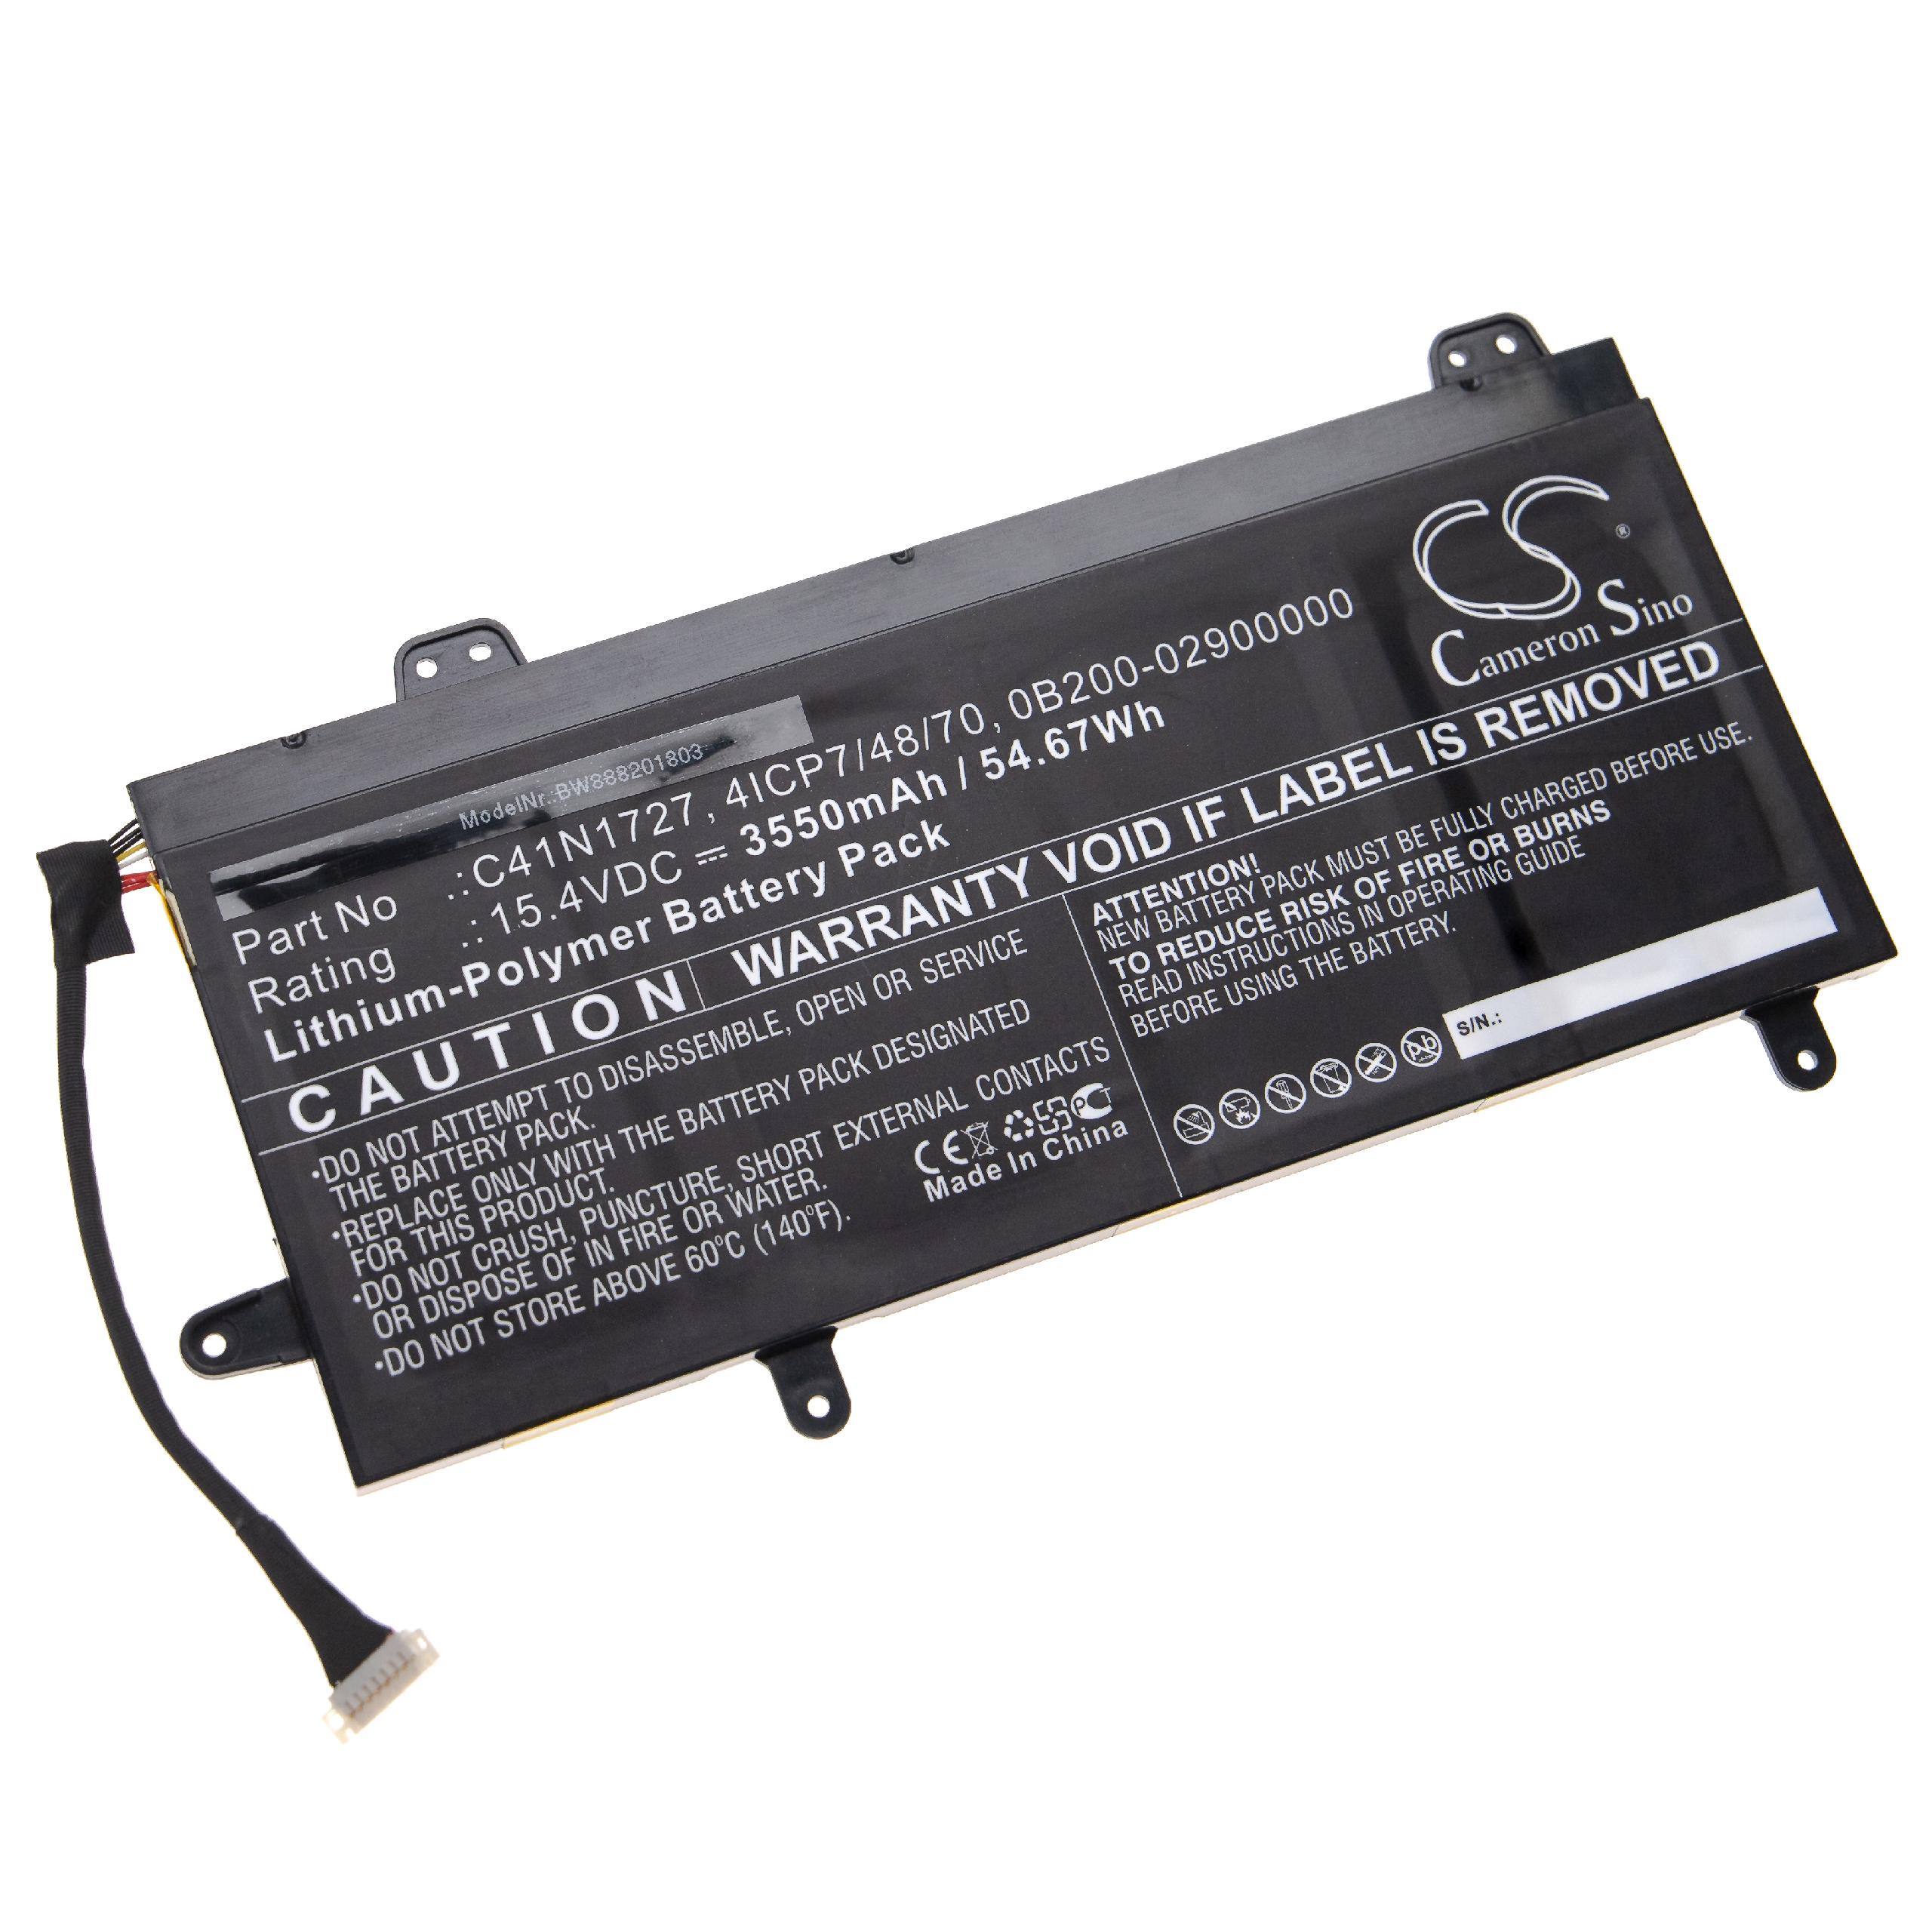 Batería reemplaza Asus C41N1727, 4ICP7/48/70, 0B200-02900000 para notebook Asus - 3550 mAh 15,4 V Li-poli